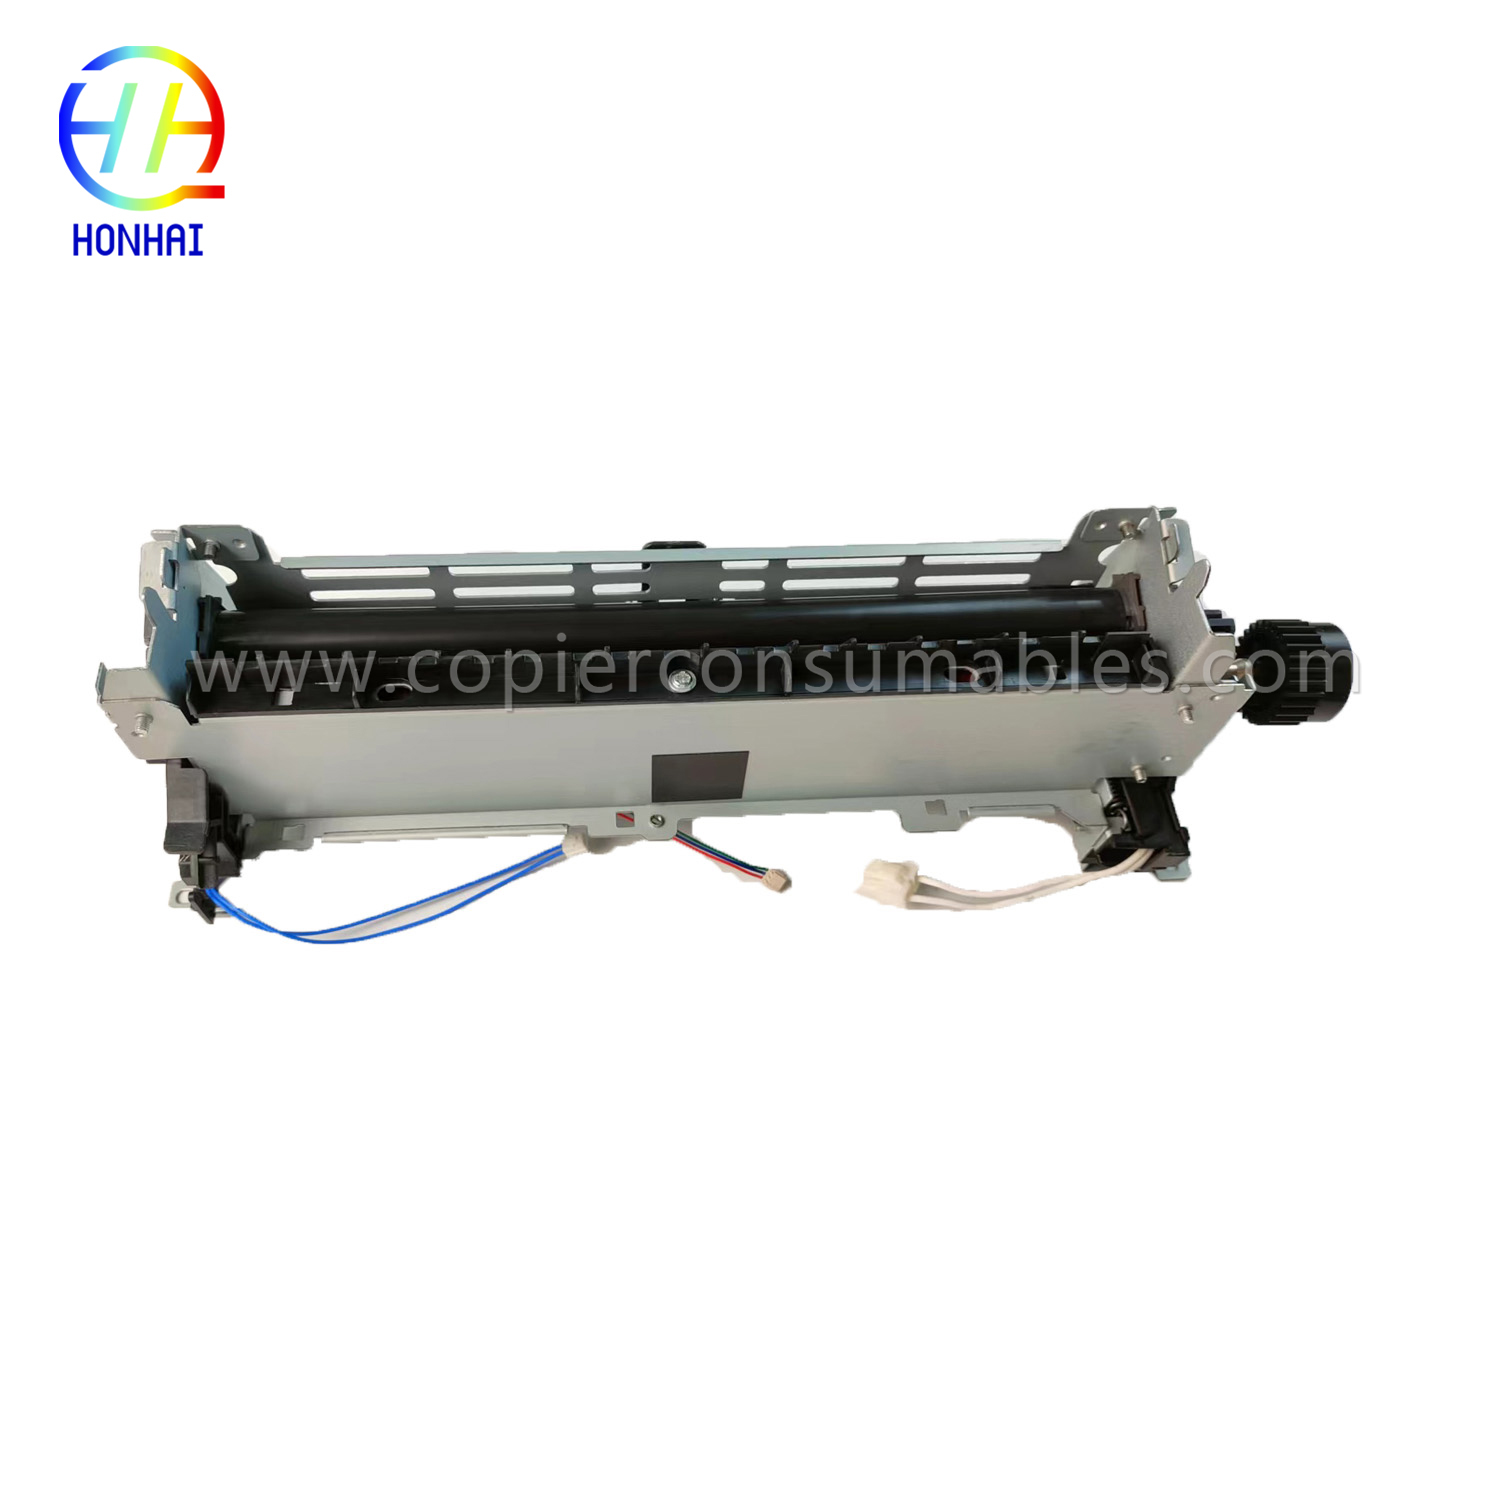 Фьюзер Flim Unit 220 V для HP LaserJet Printer Pro 400 M401 M401DN M425 RM1-8809 RM1-8809-000CN